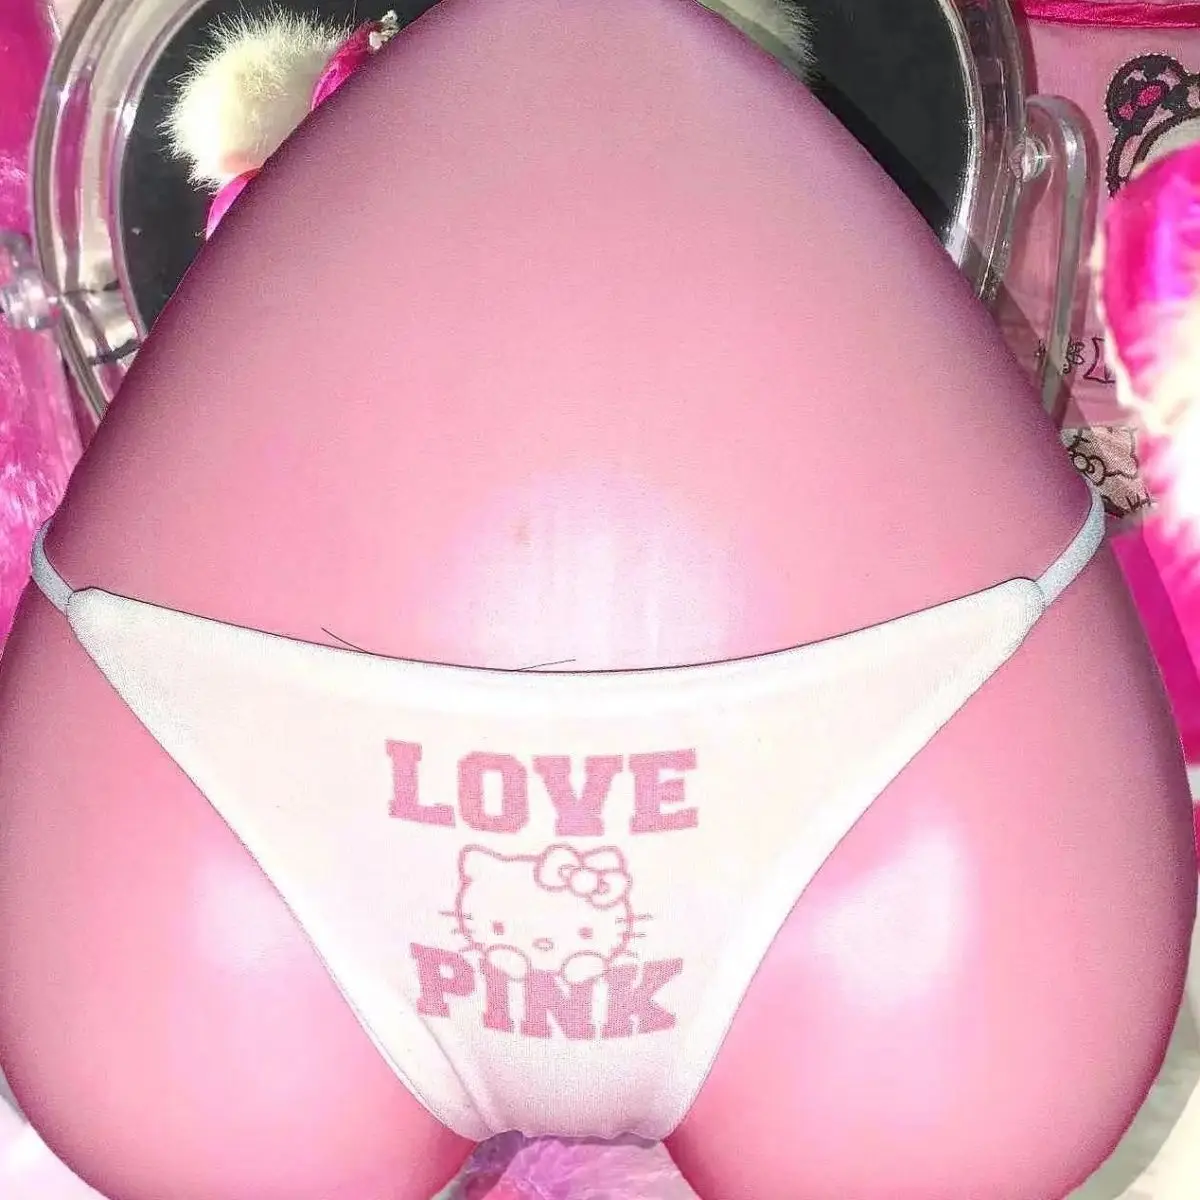 bonifacio castro recommends Vs Pink Panties Tumblr